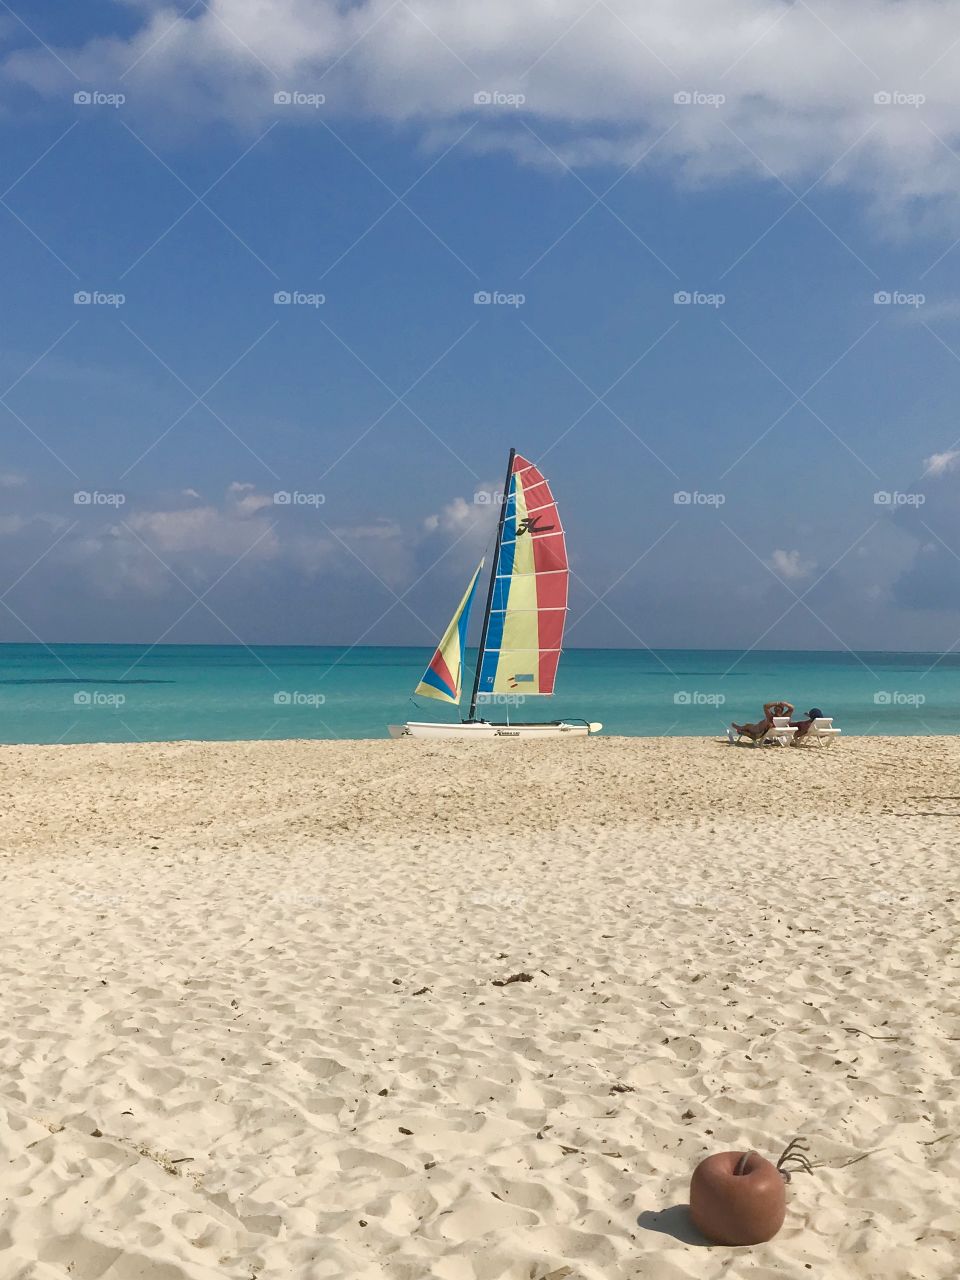 Catamaran on Beach in Cuba